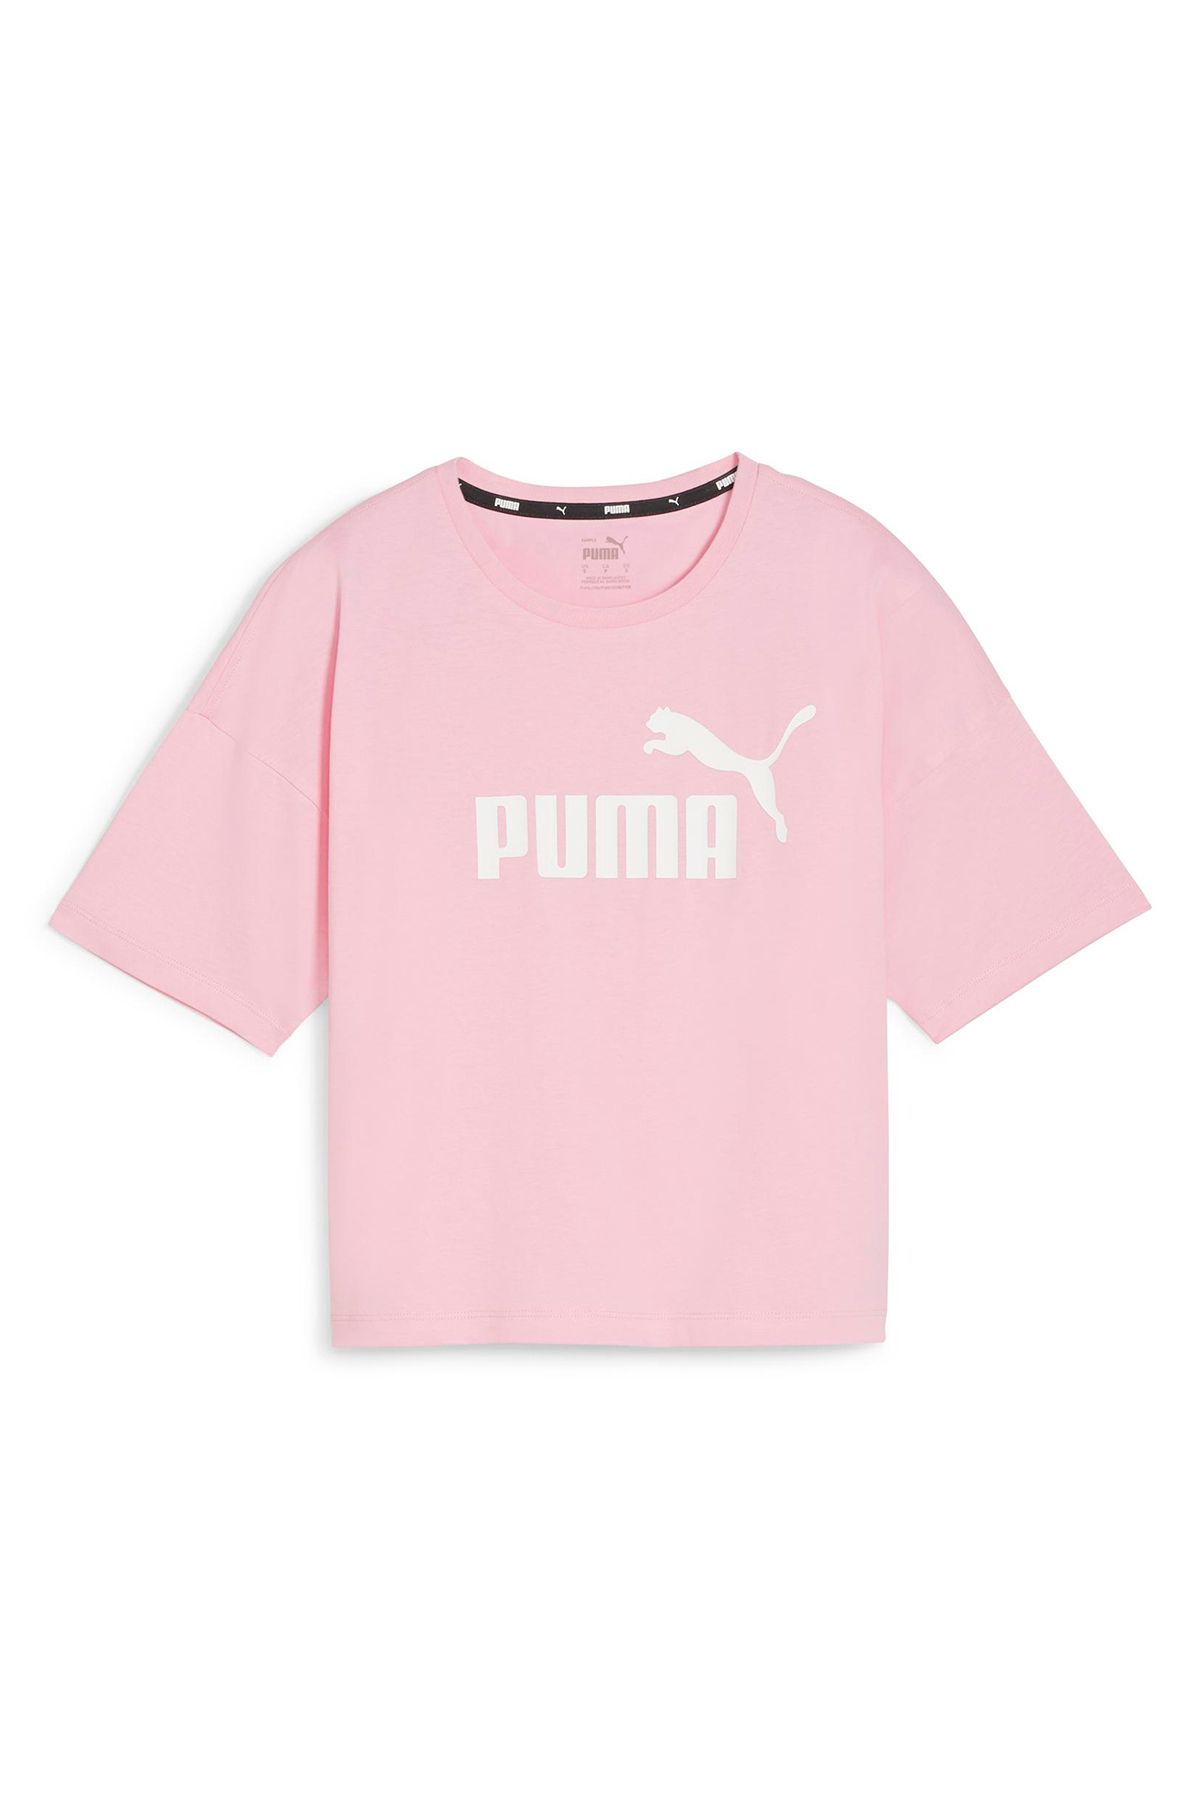 Puma Essentials Kadın Pembe Günlük Stil T-Shirt 58686628